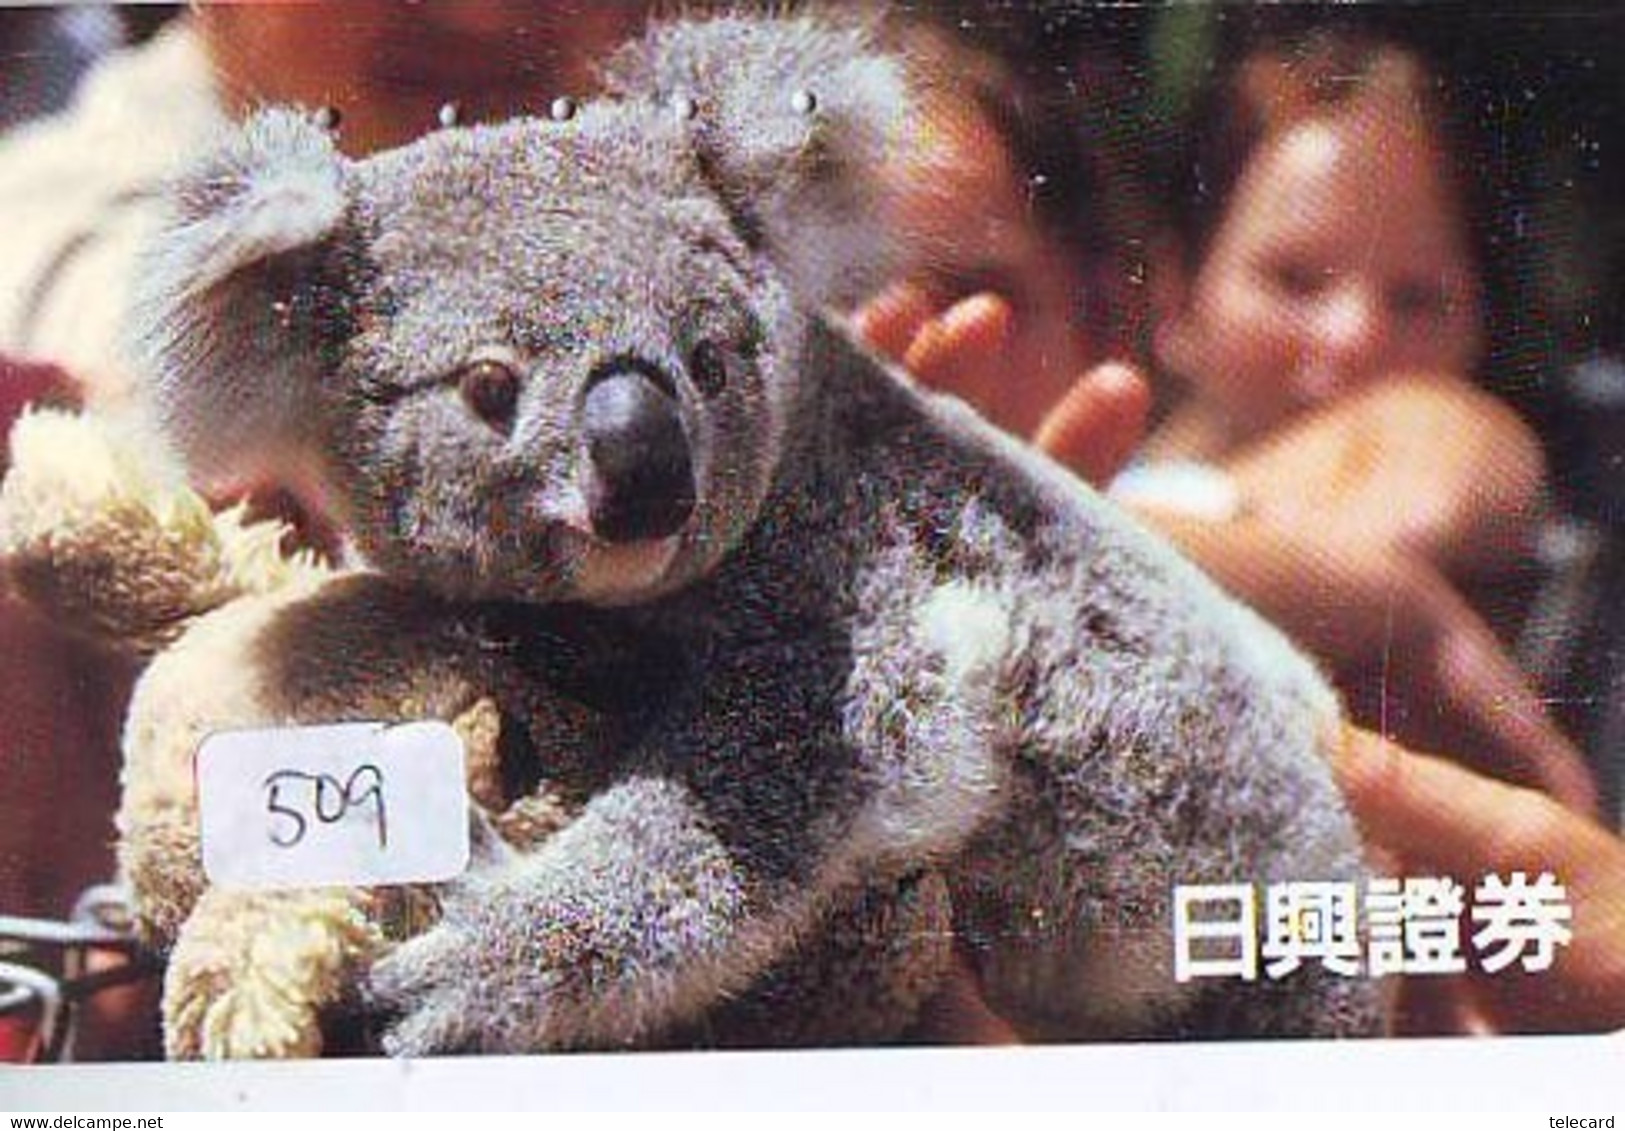 Telecarte Japon * KOALA * BEAR * Koalabär (509) * PHONECARD JAPAN ANIMAL * TIER TELEFONKARTE - Jungle